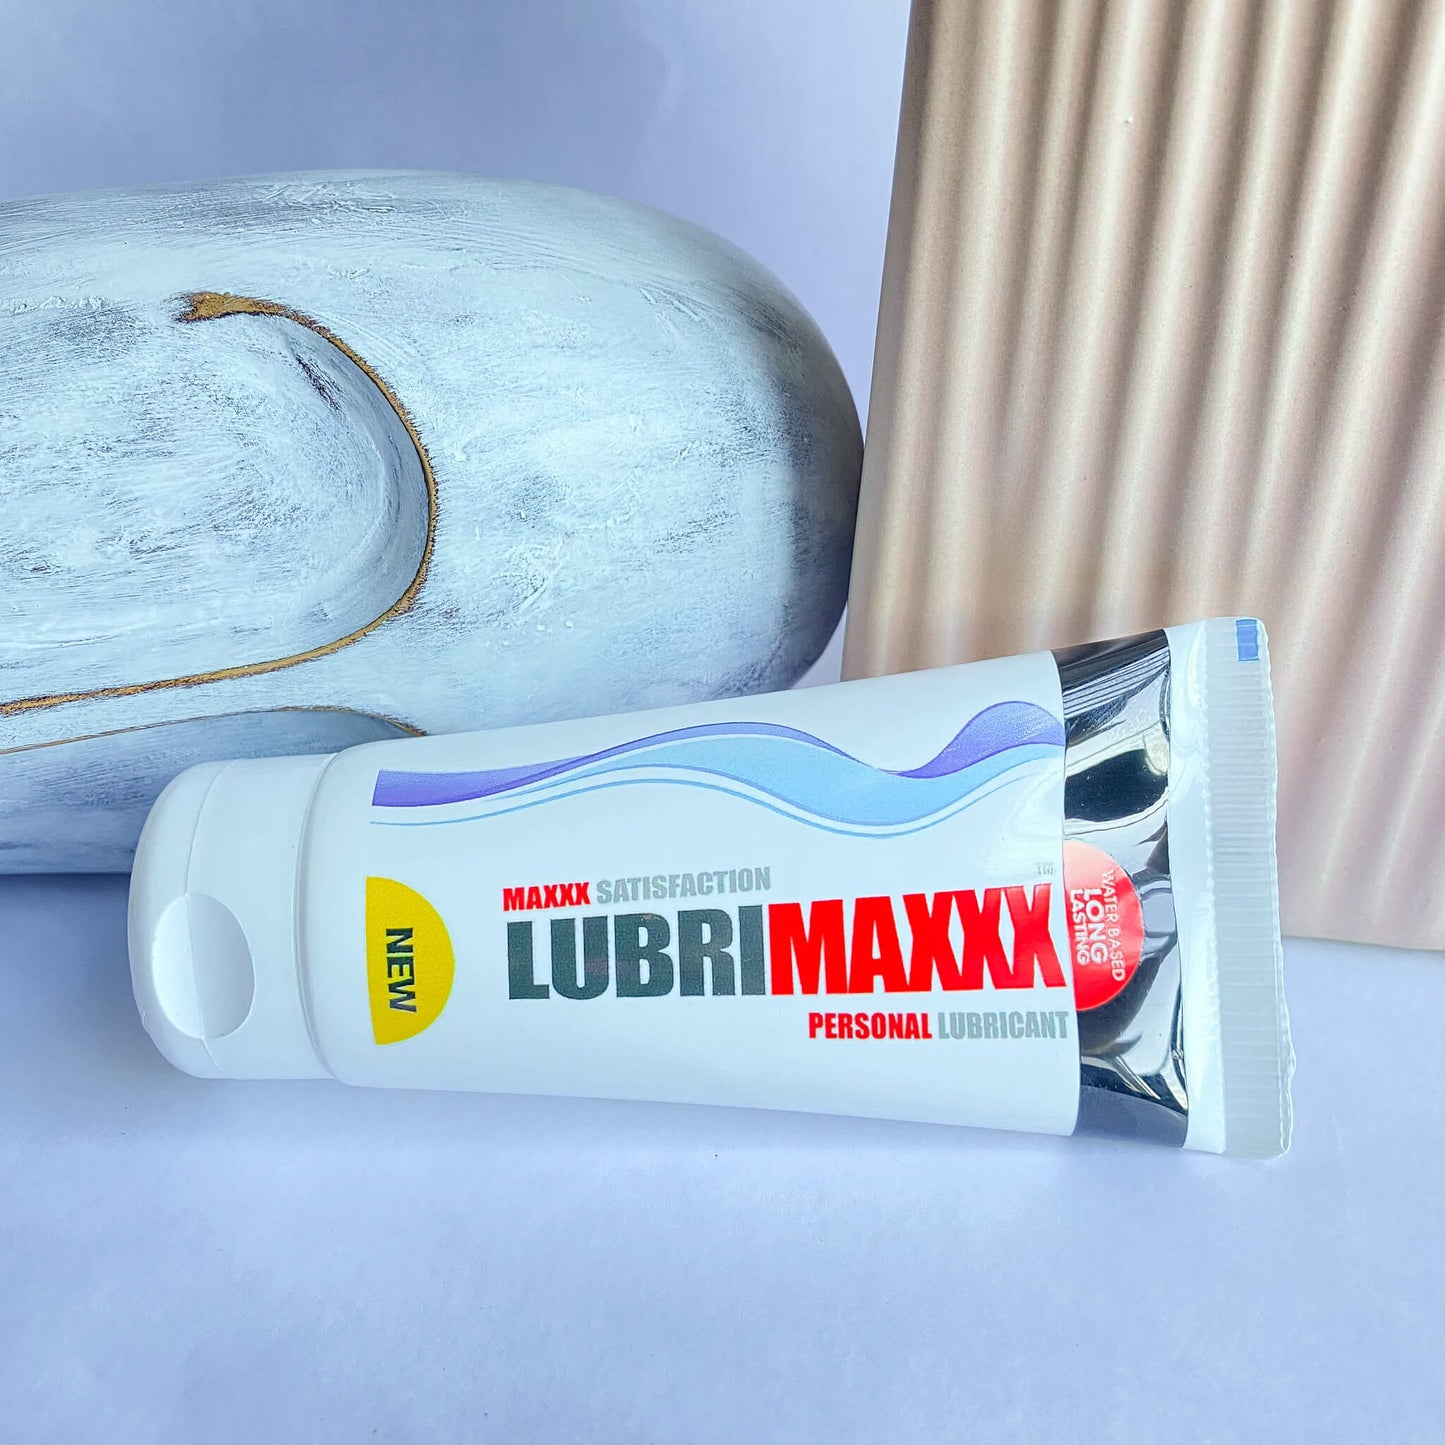 Lubrimaxx Personal Lube Original Flavour Tube (50ml)